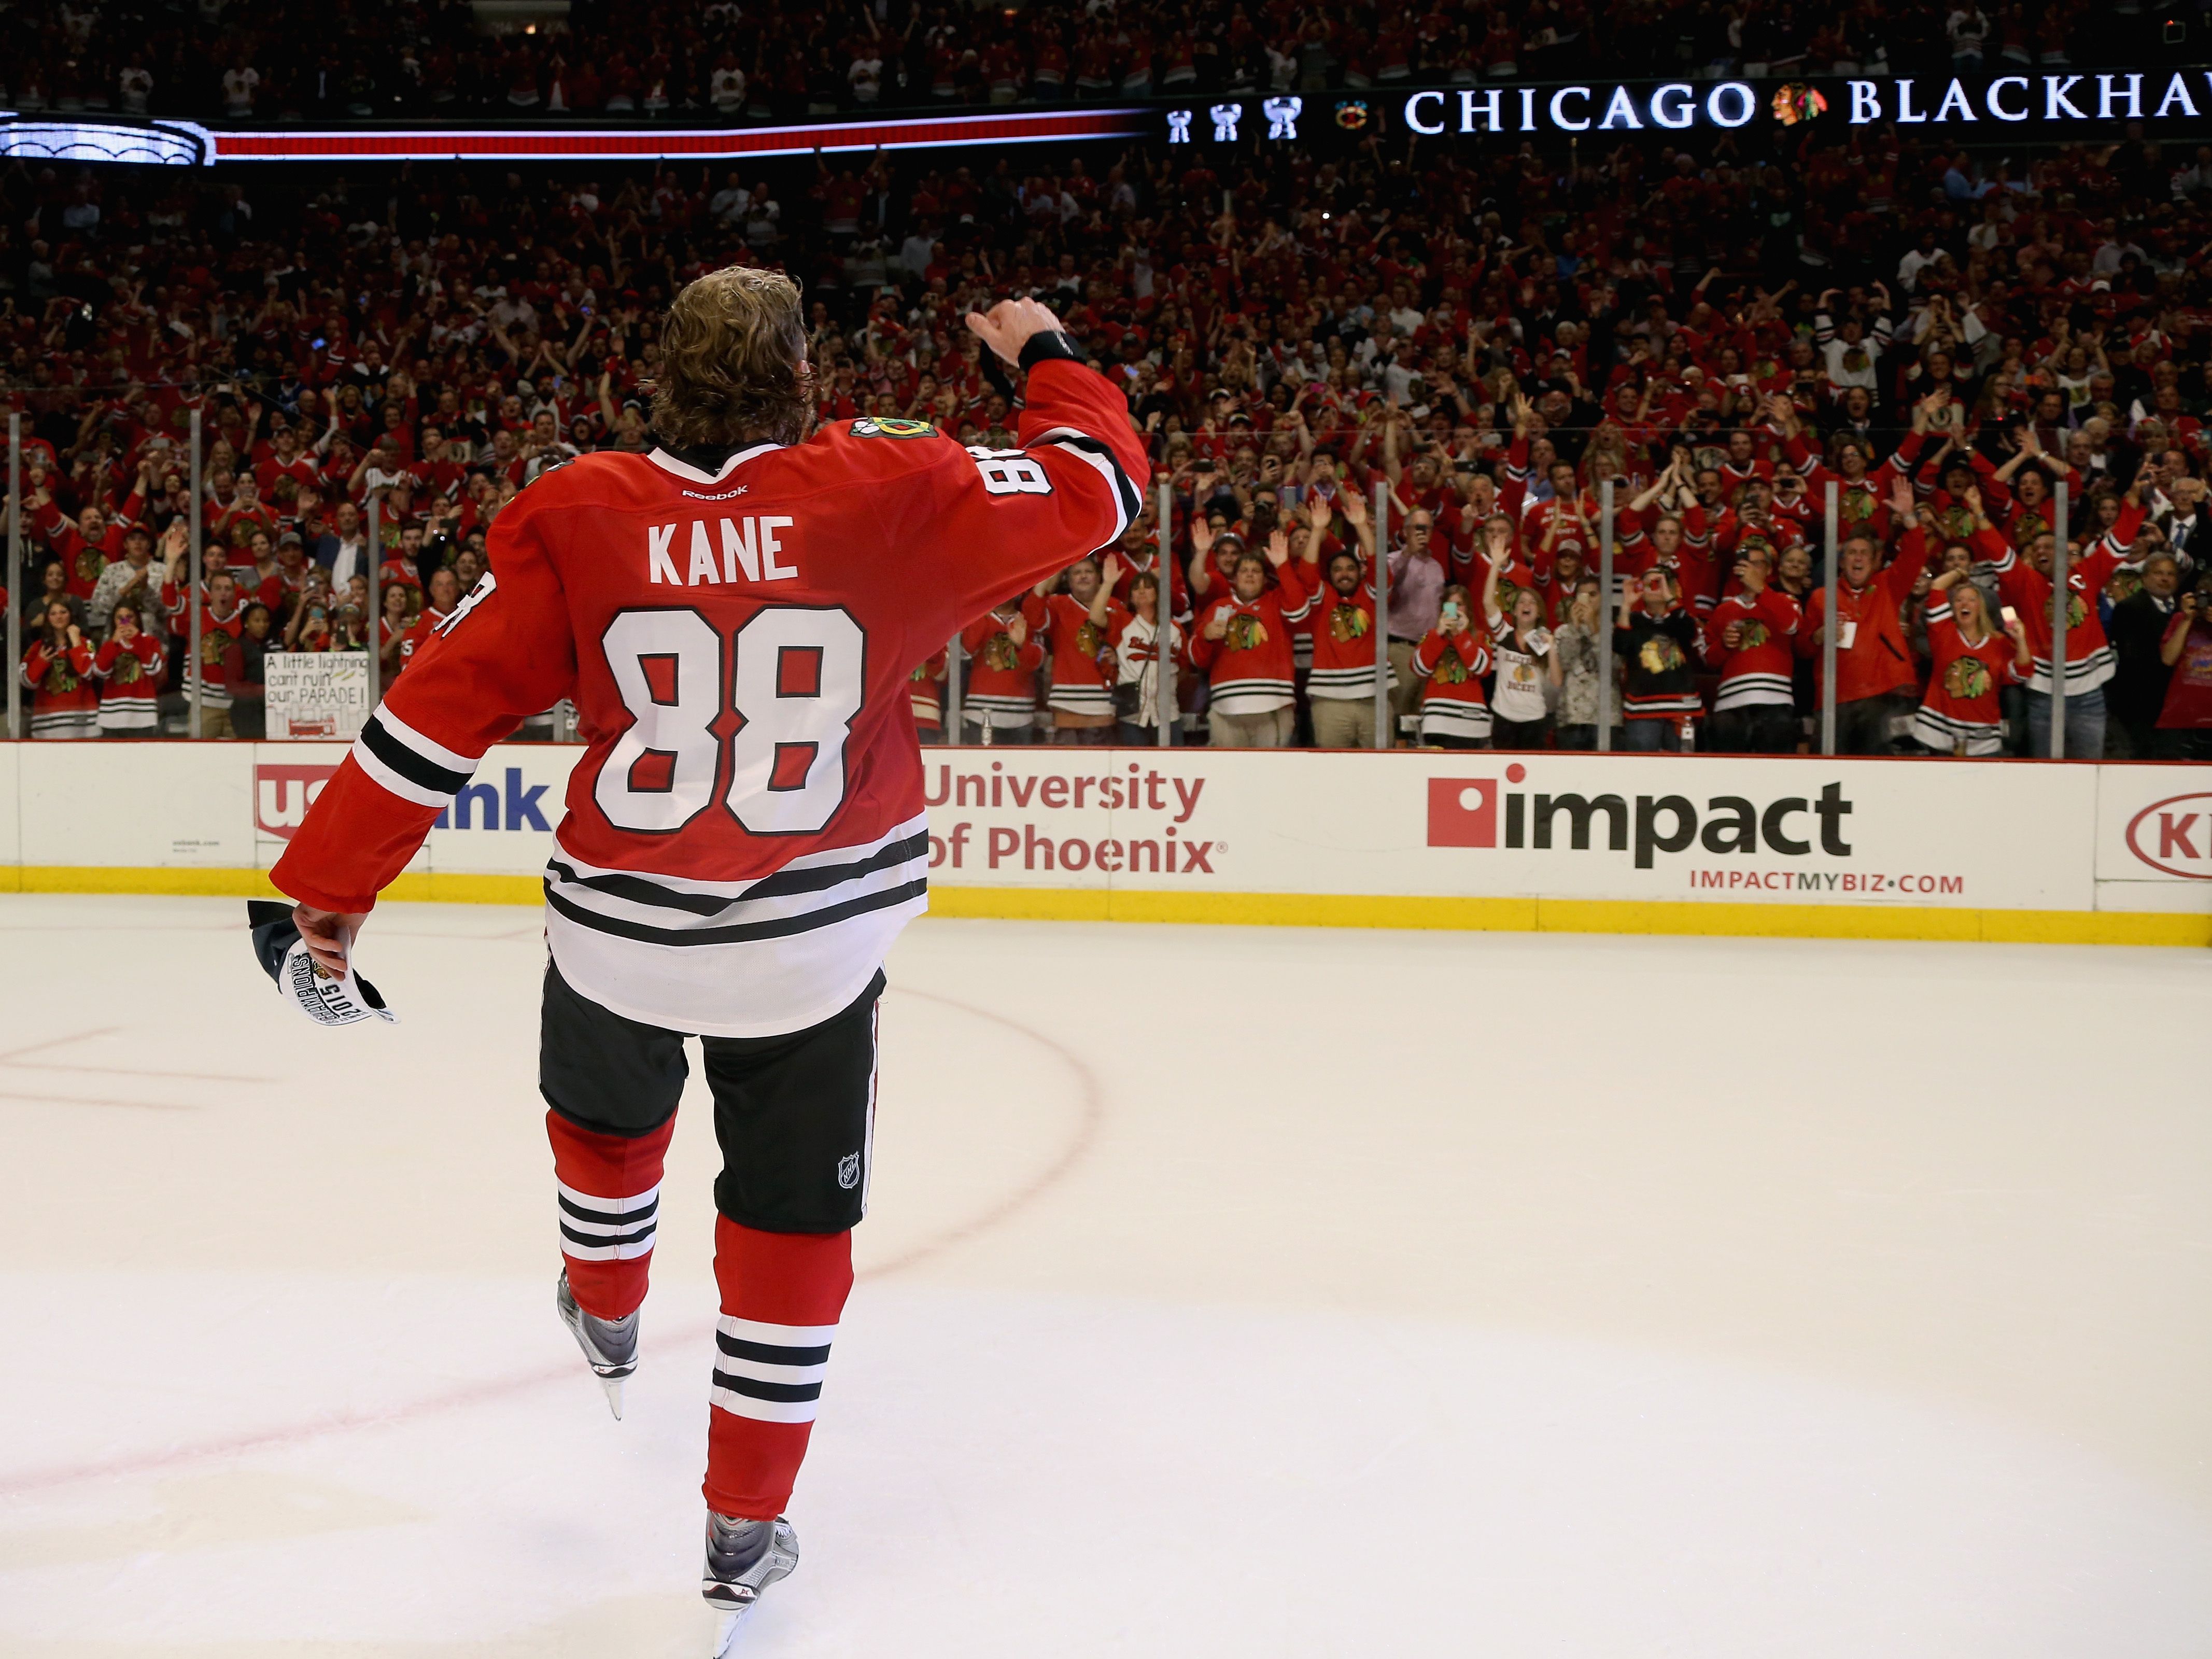 Hockey player with Kane on his shirt skating and waving 